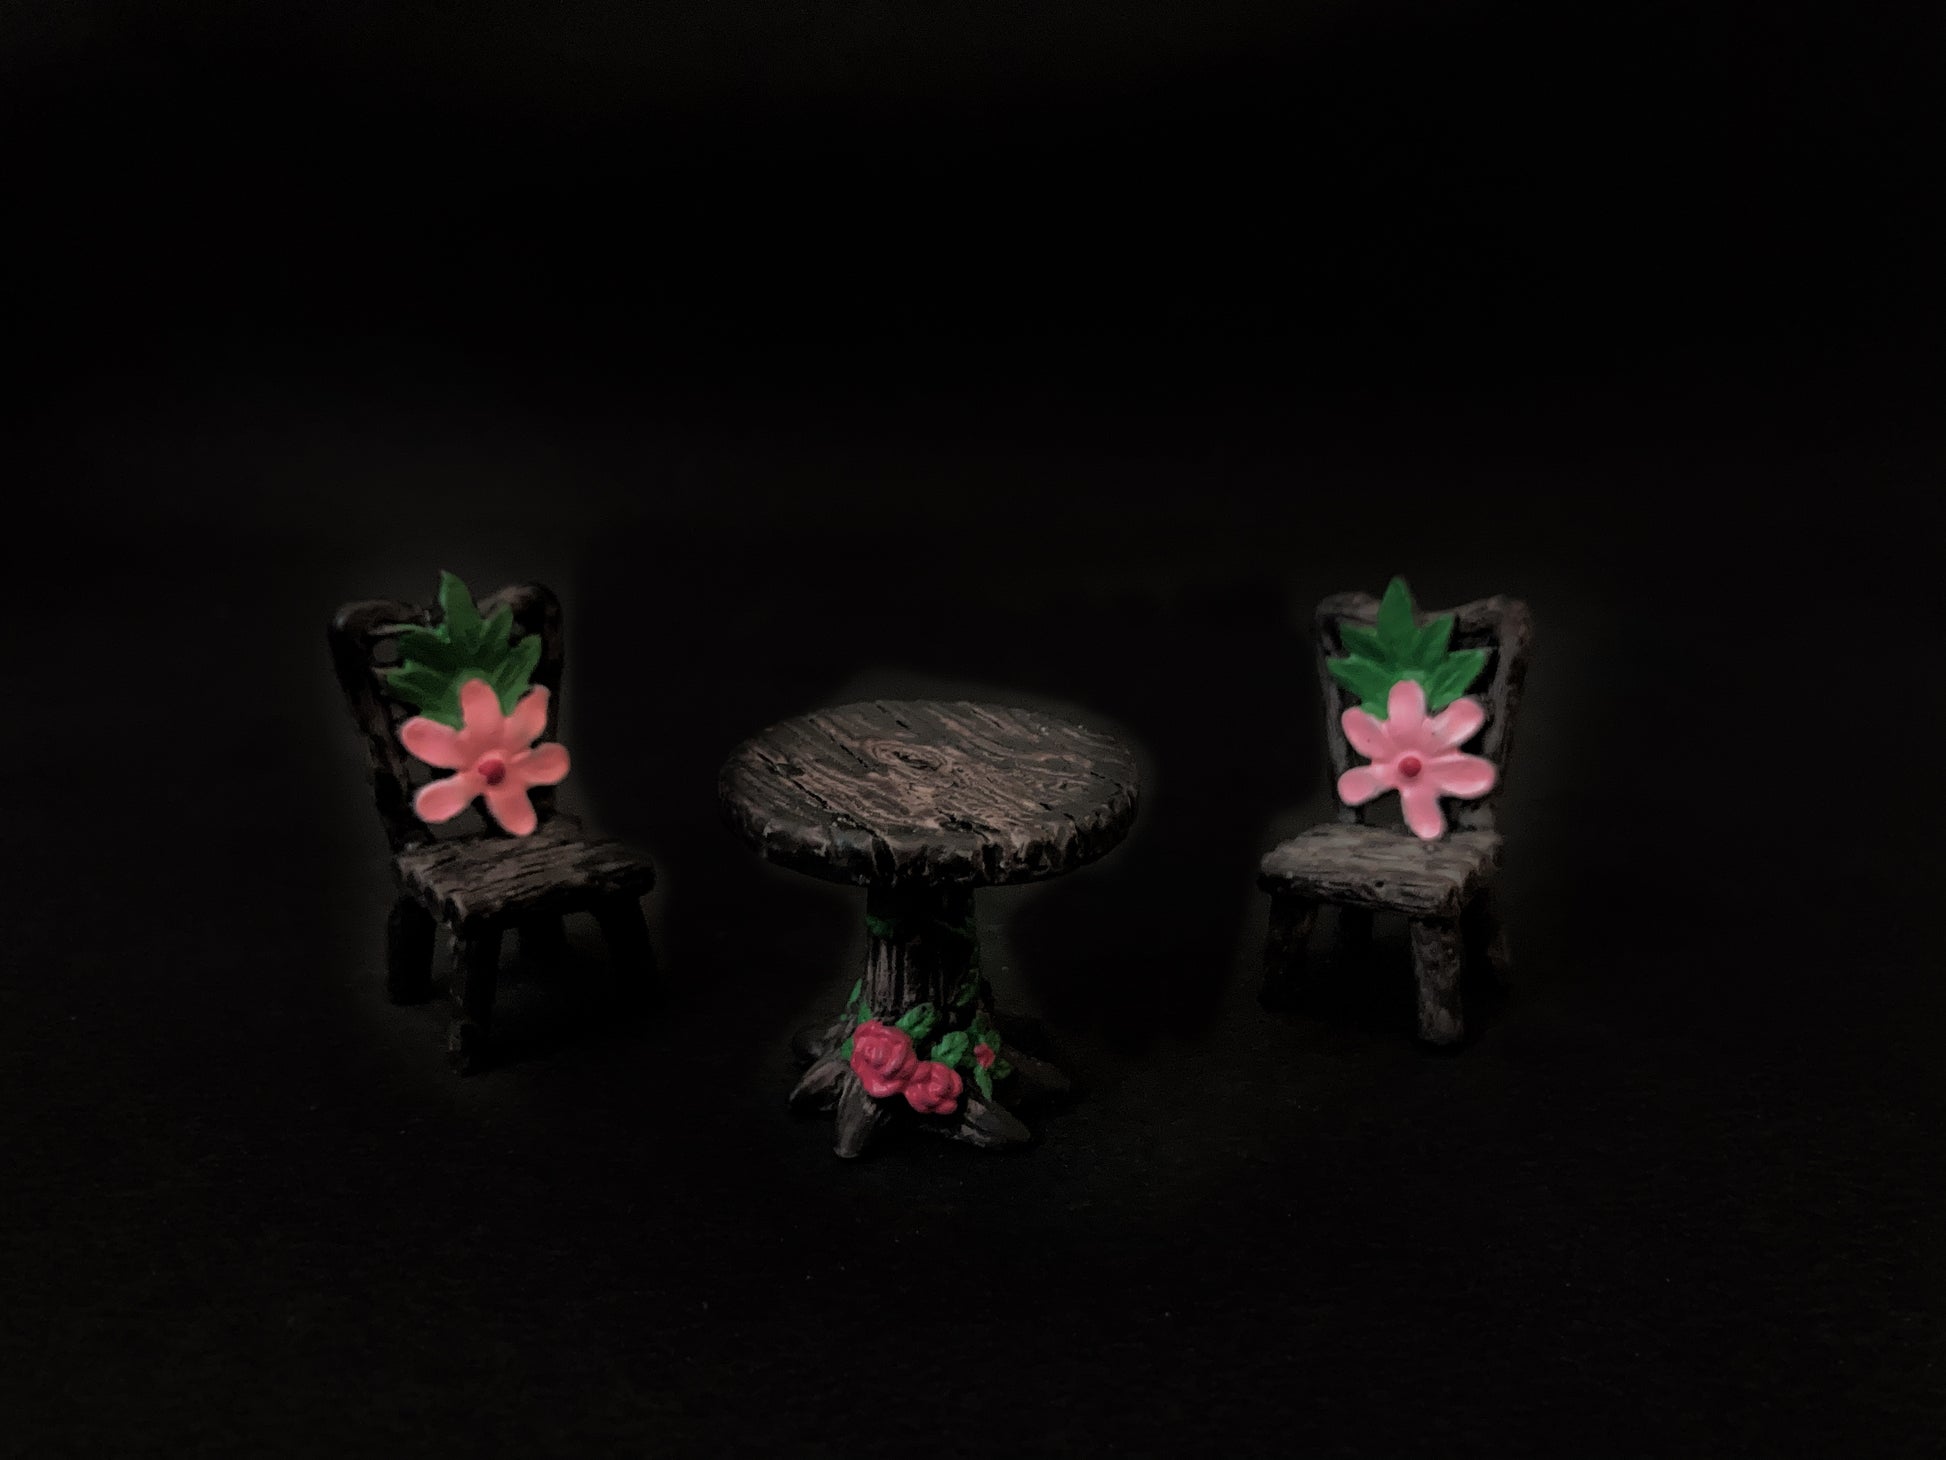 kursi, maze, phool, table, chair, flower, floral